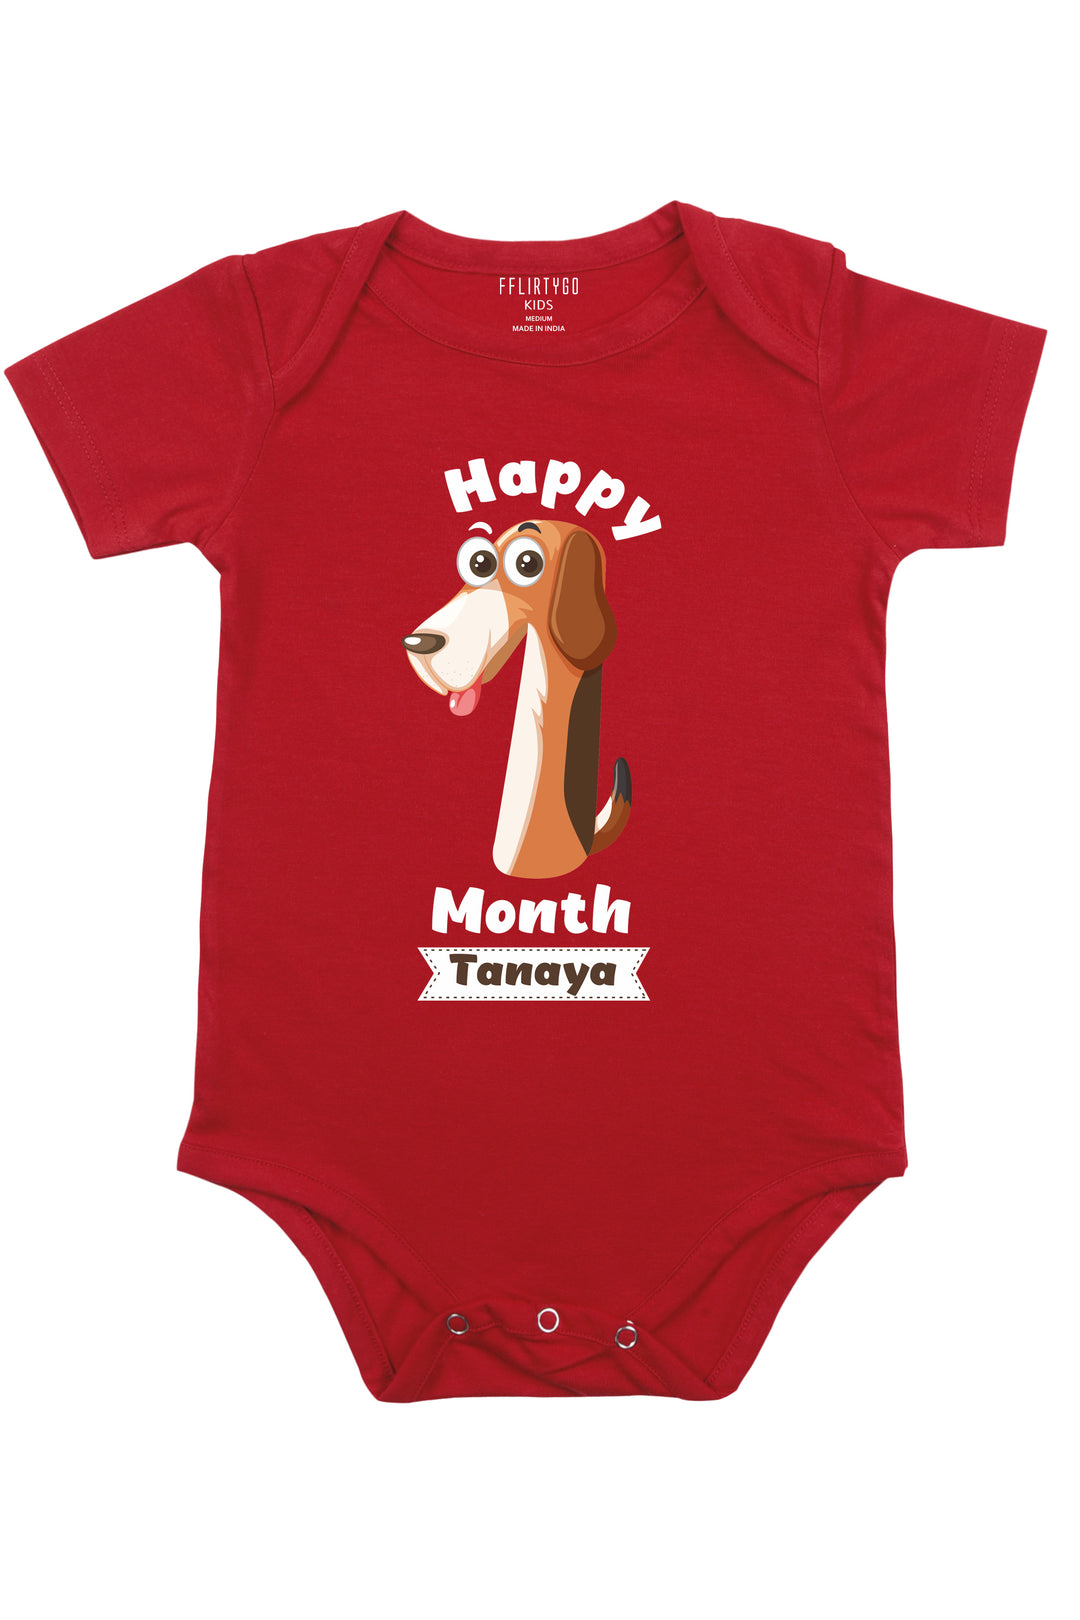 One Month Milestone Baby Romper | Onesies w/ Custom Name